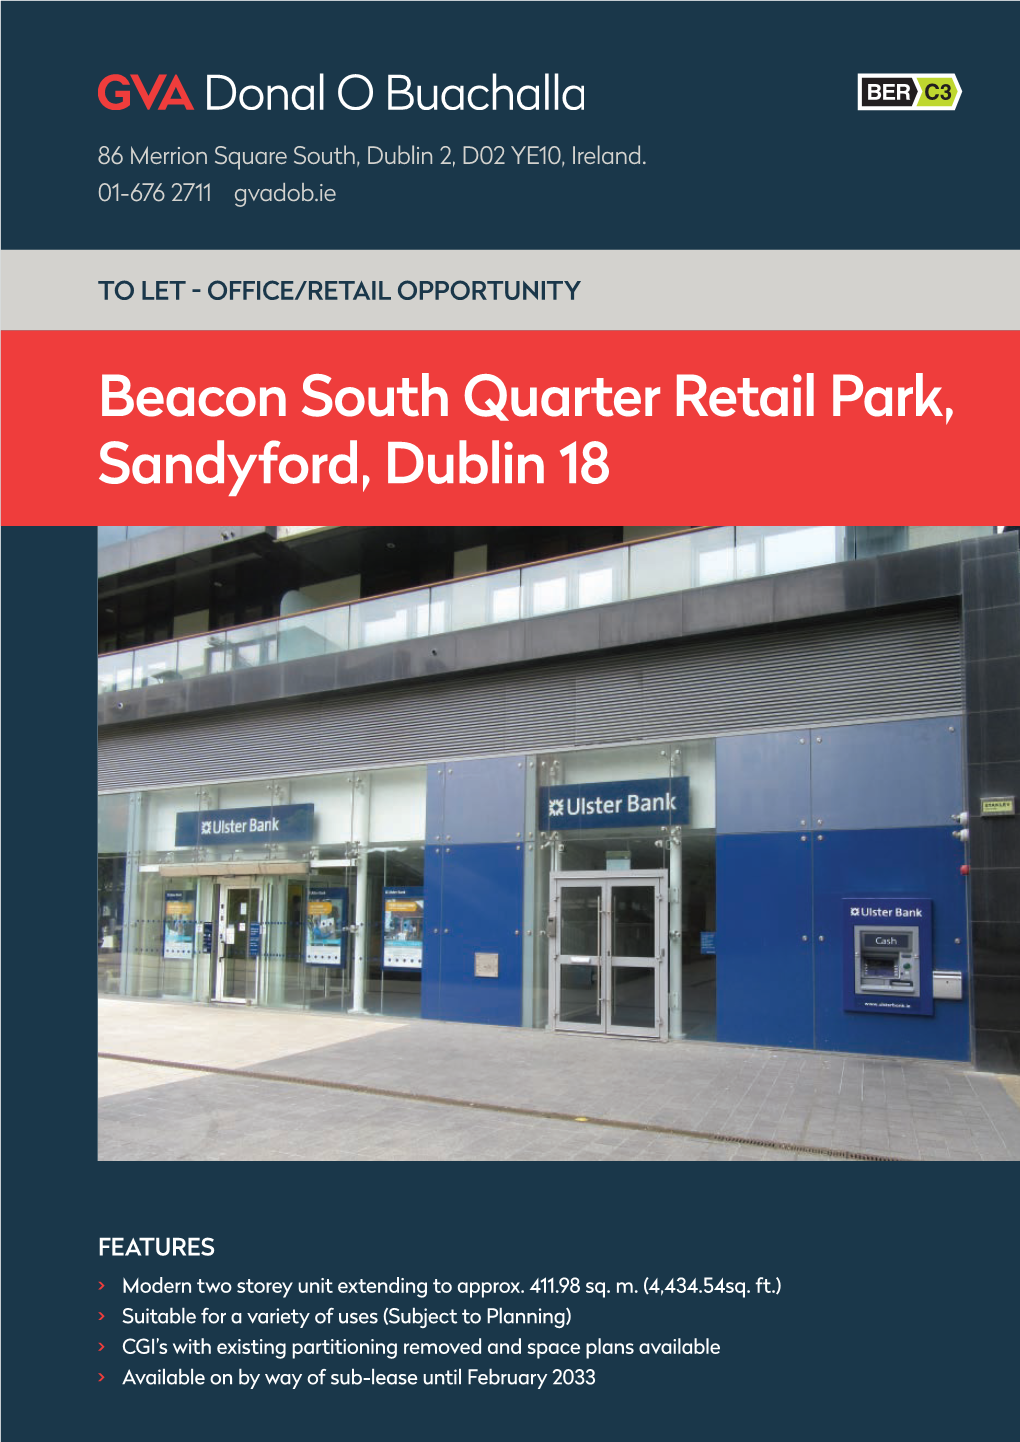 Beacon South Quarter Retail Park, Sandyford, Dublin 18